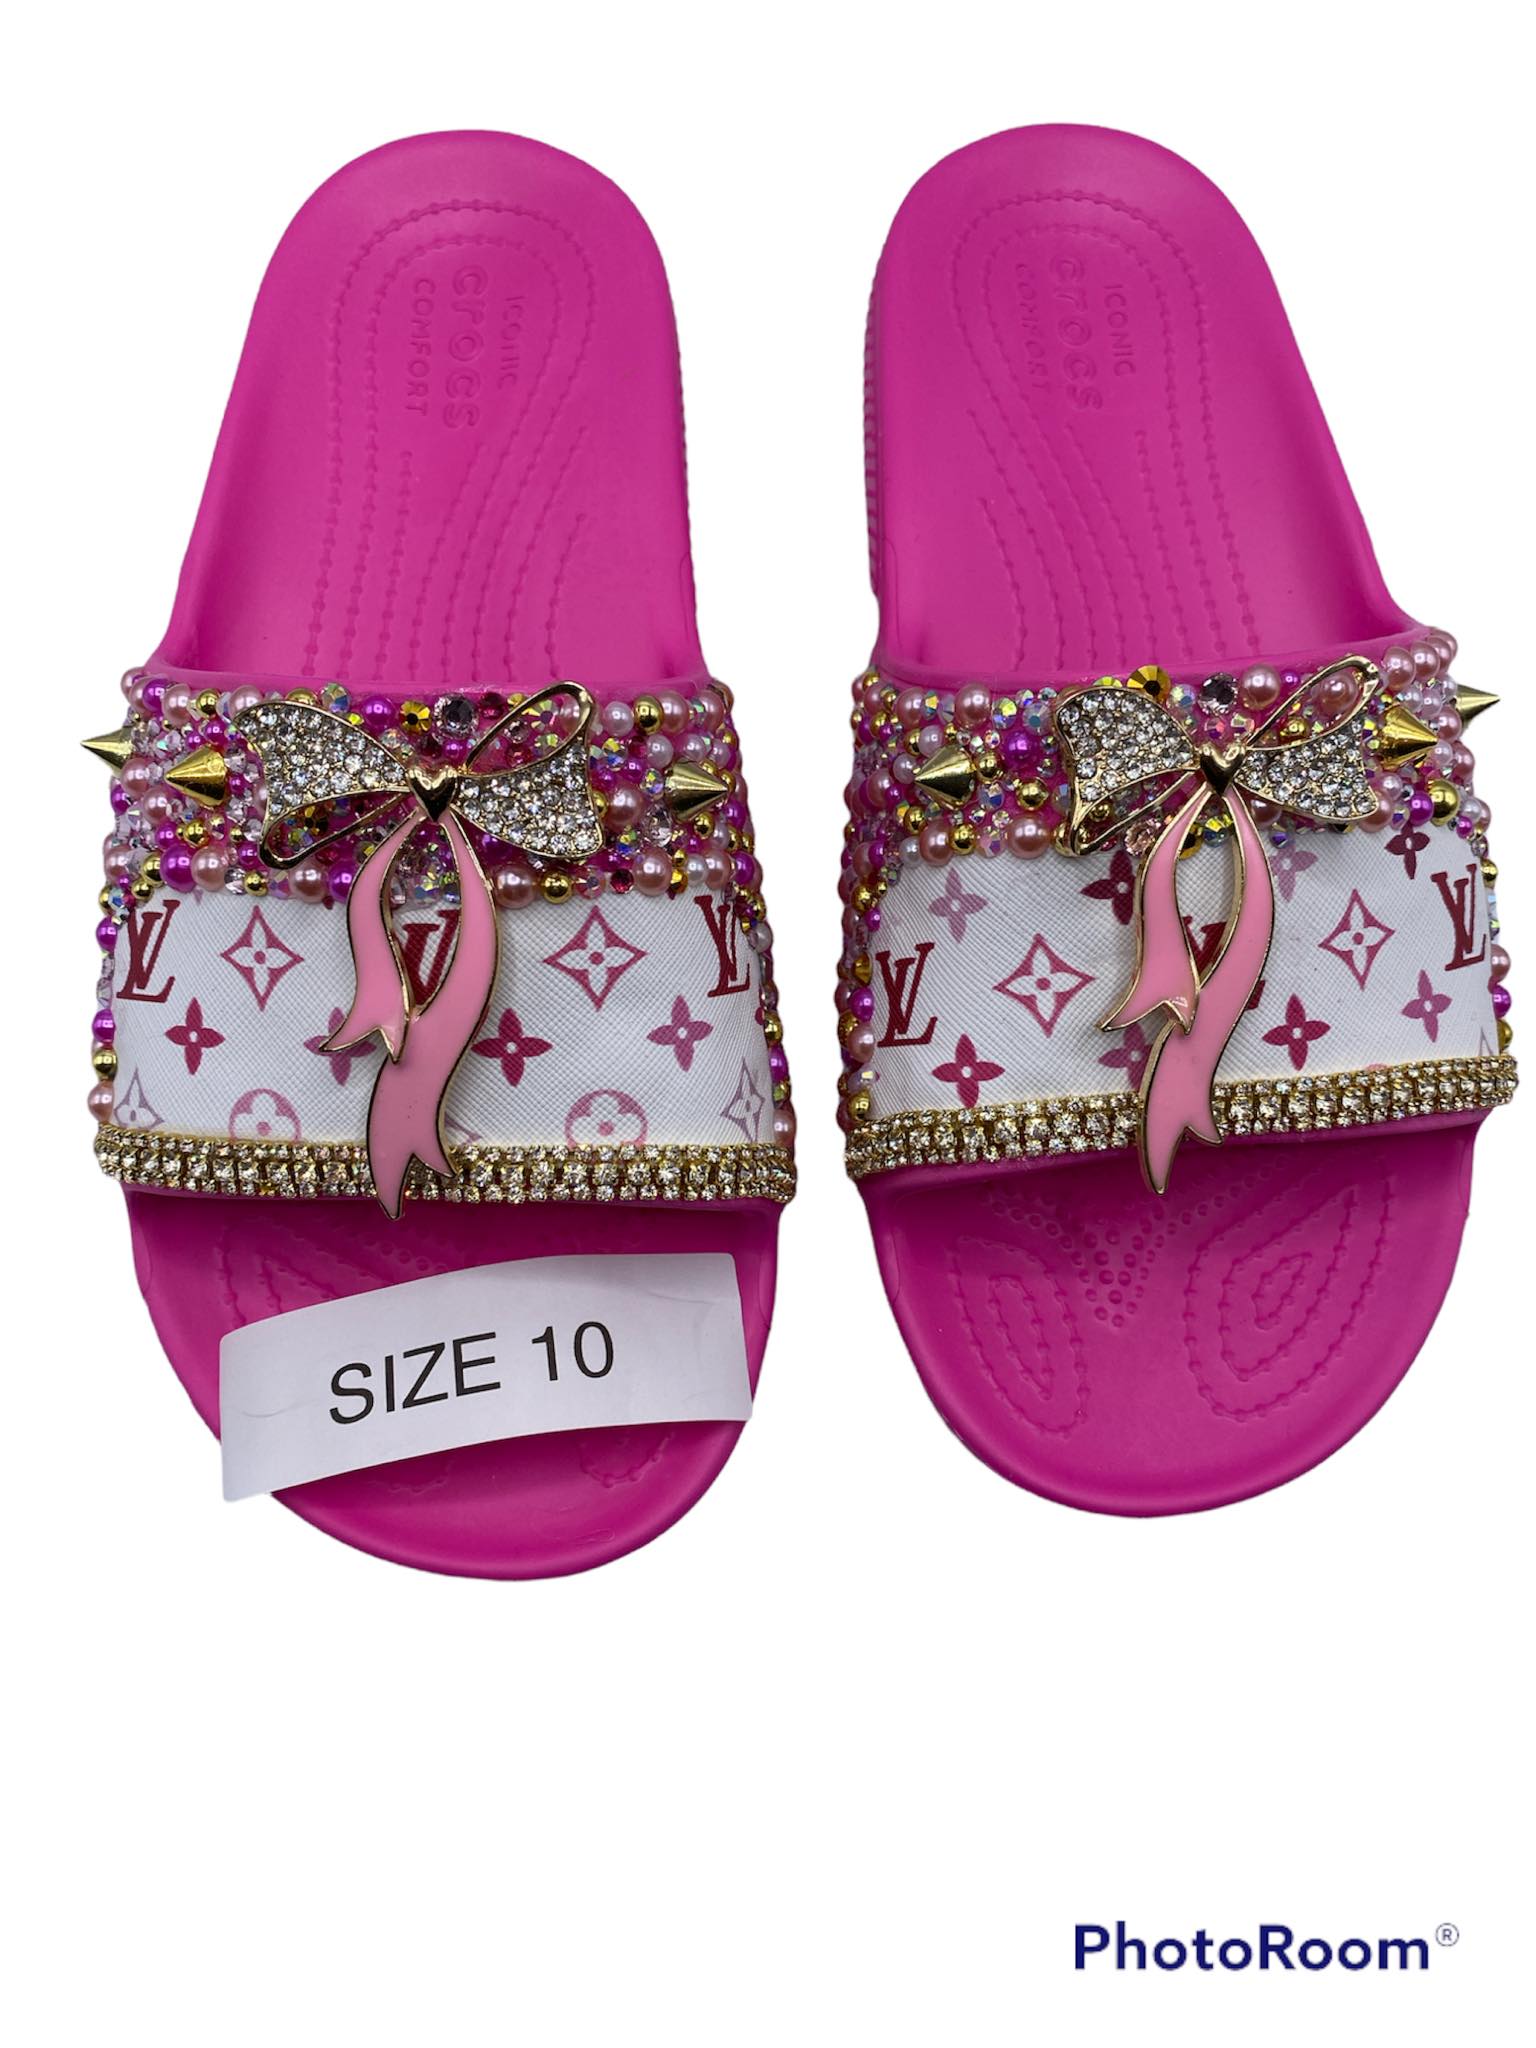 Bling Hot Pink Sandals – PinkIce Novelty